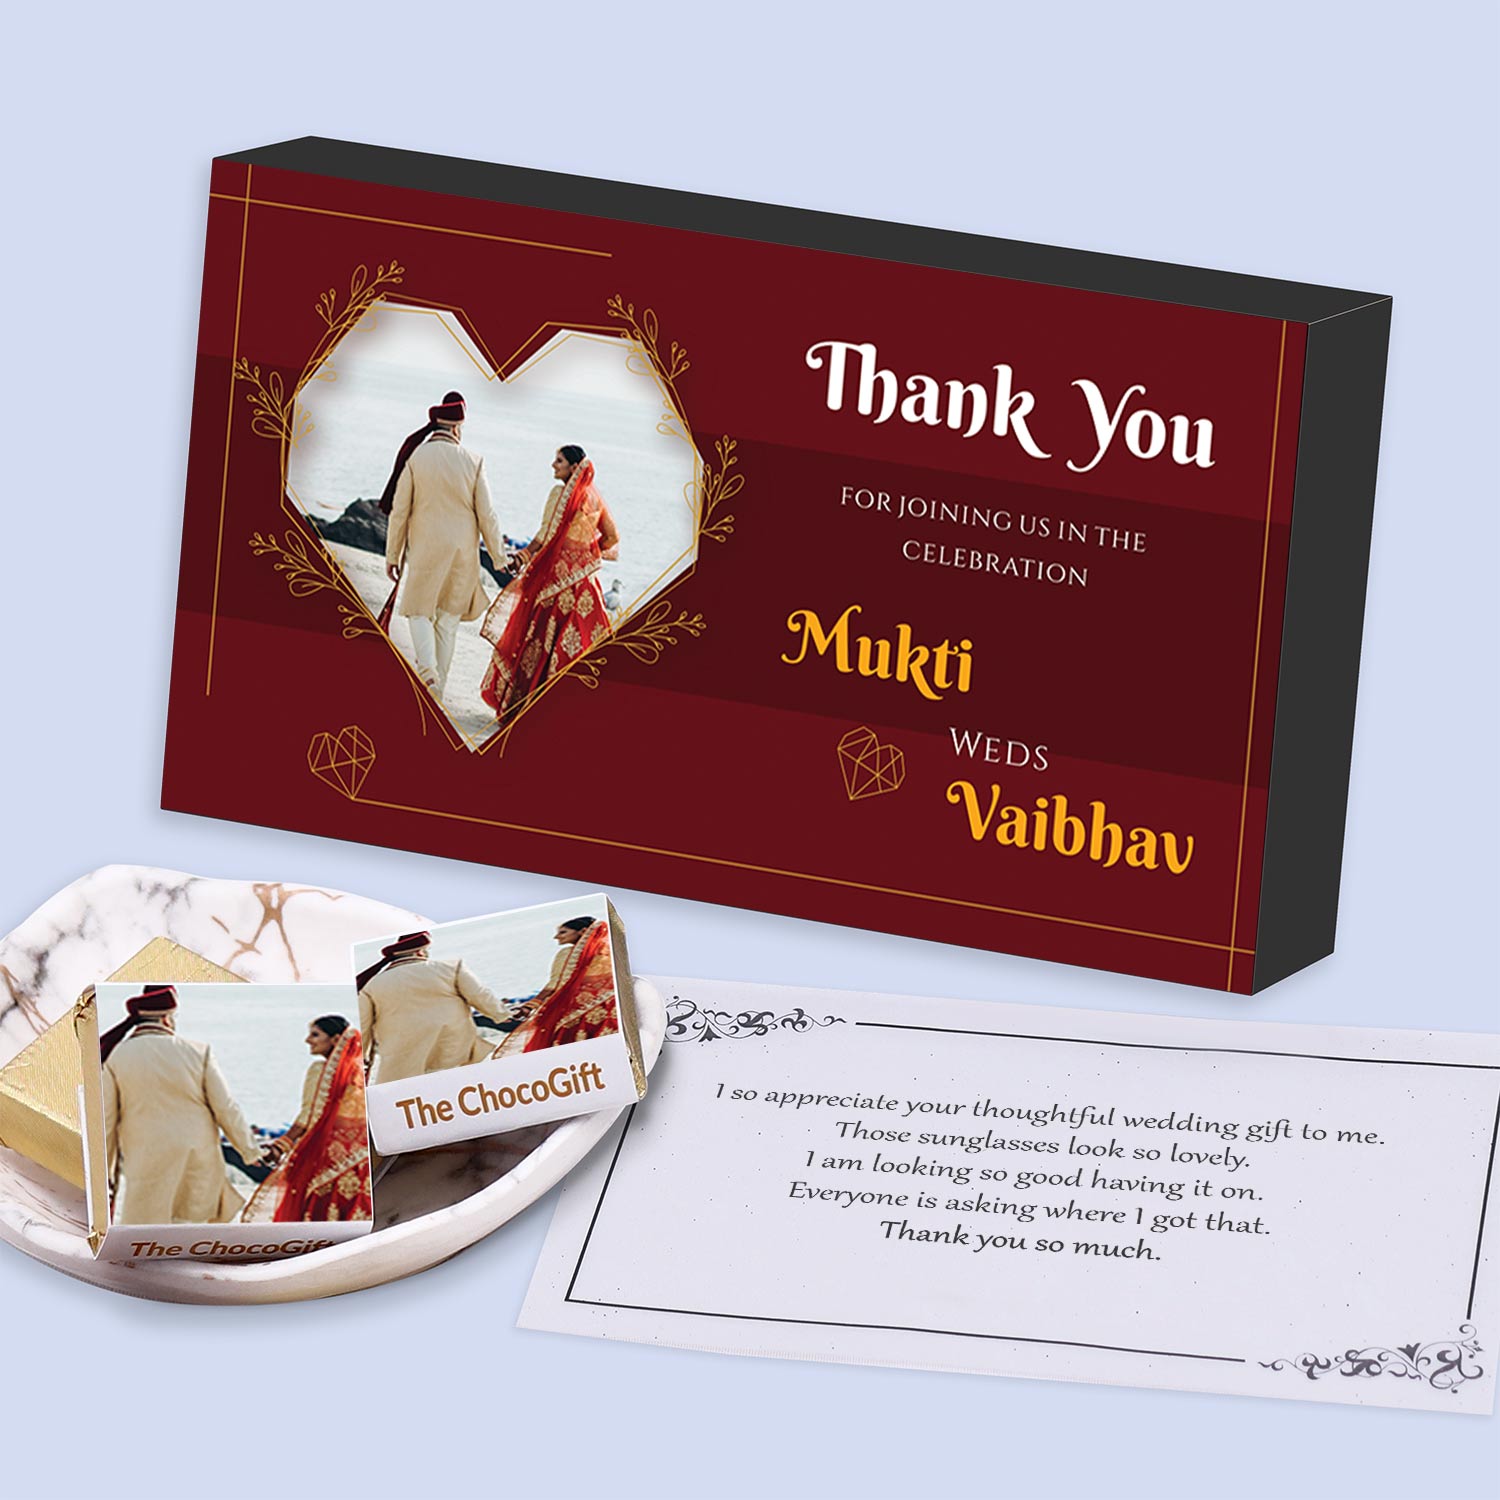 "Thank You" personalised wedding return gift chocolates